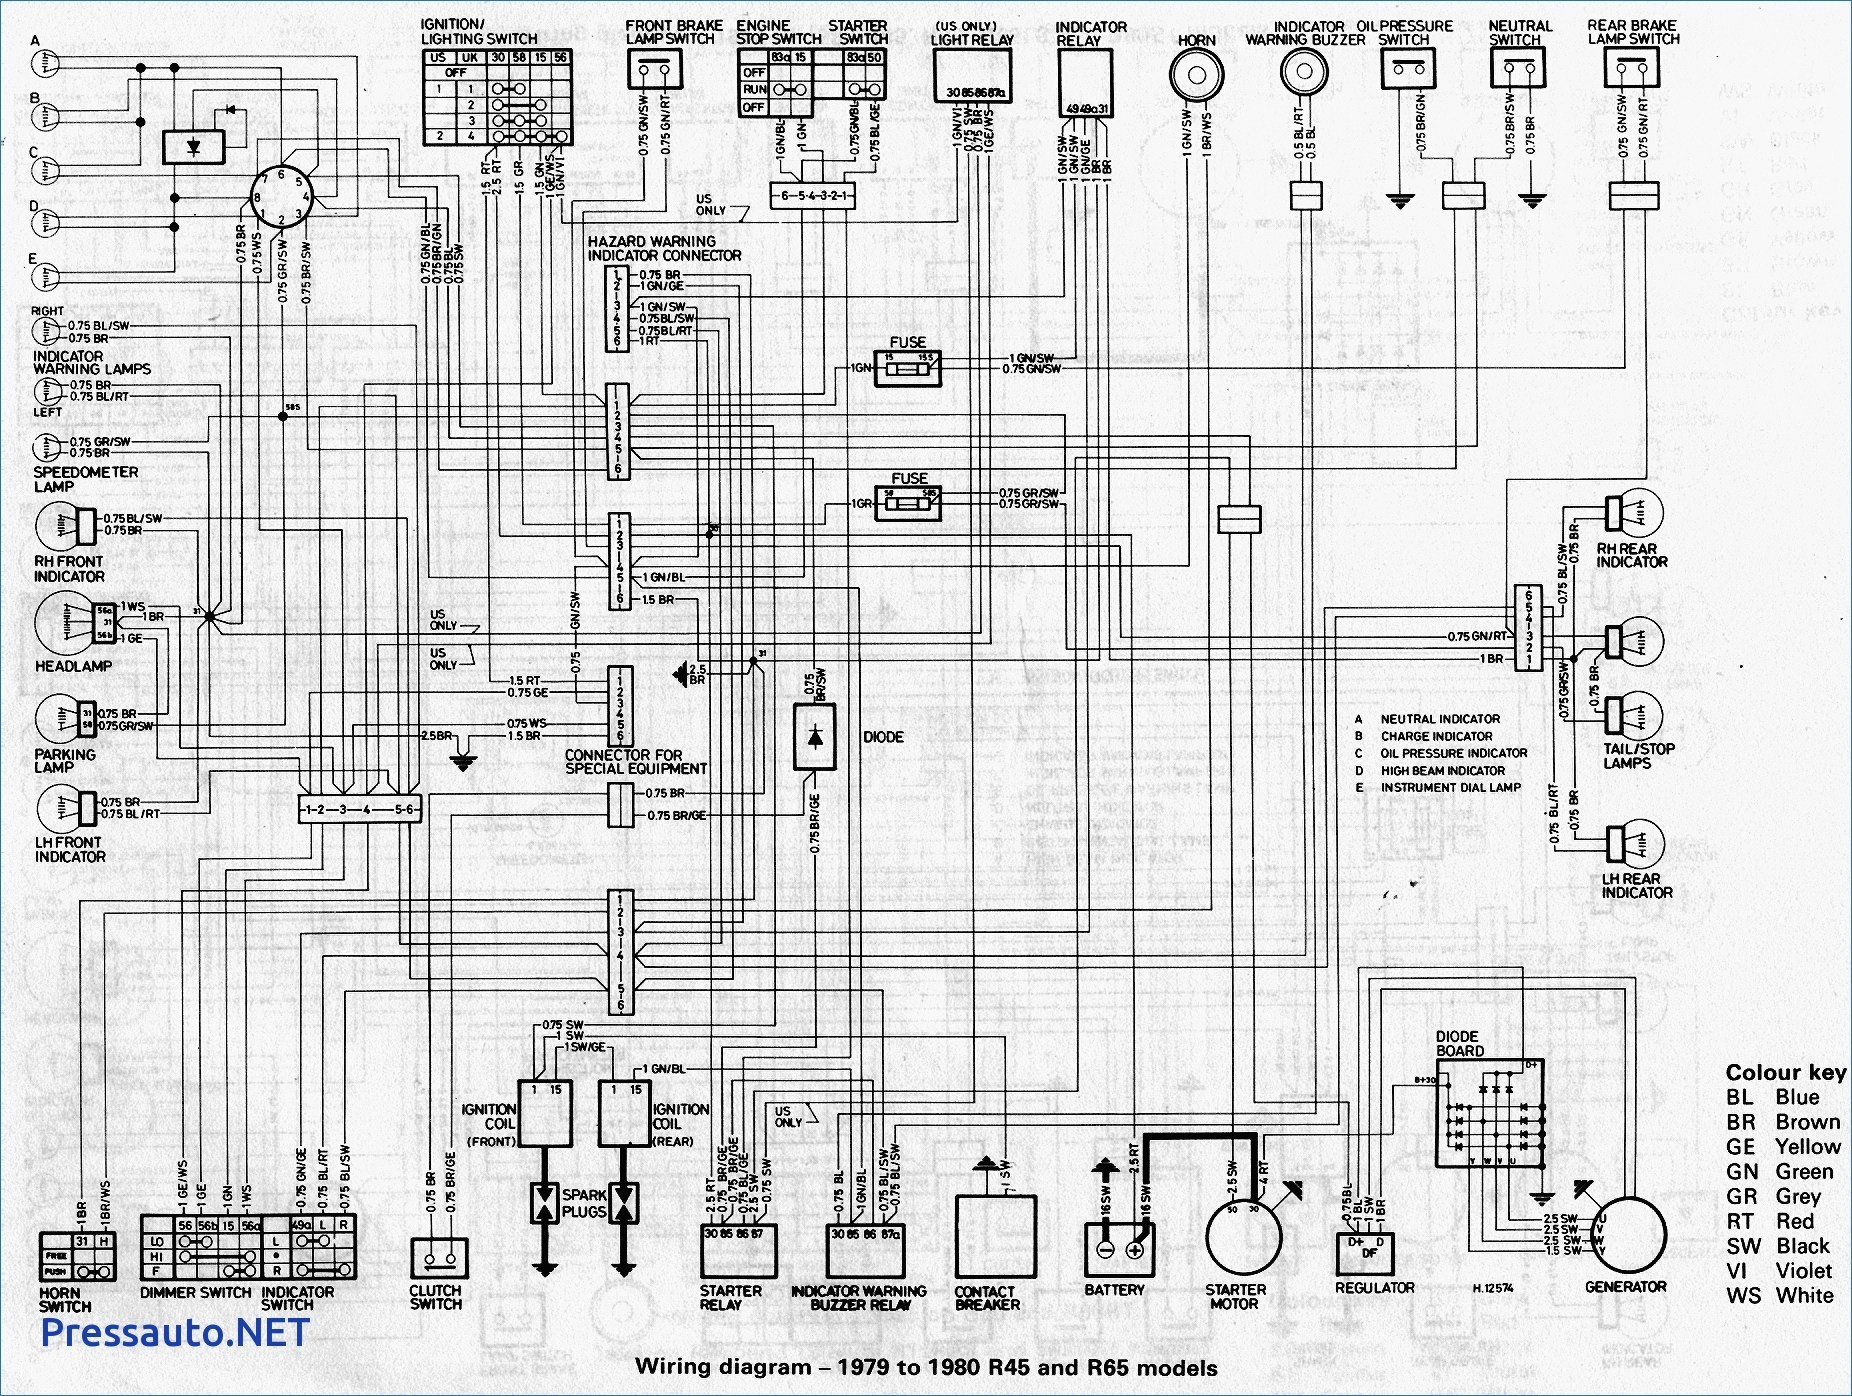 1977 Mgb Fuse Box Wiring - Wiring Diagram Schemas